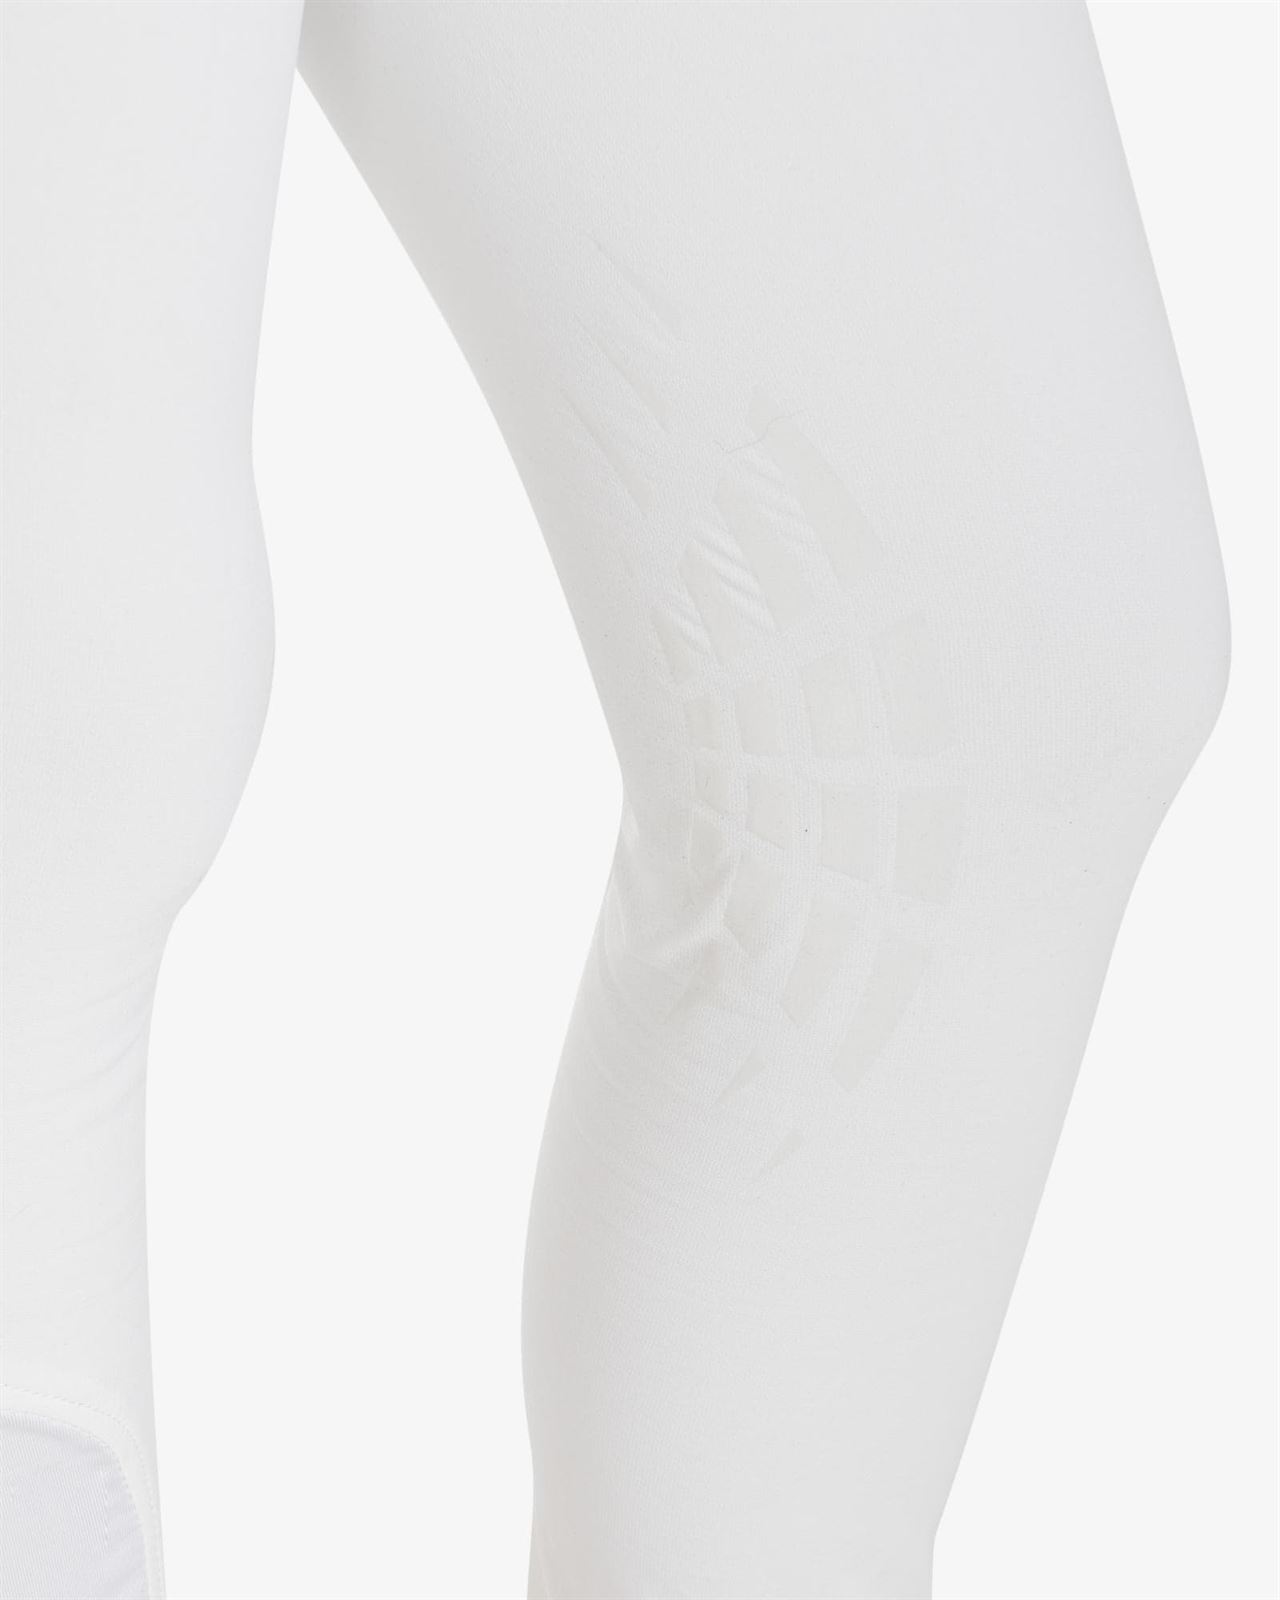 Pantalón unisex EQUESTRO color blanco, grip rodilla, tallaje infantil - Imagen 5